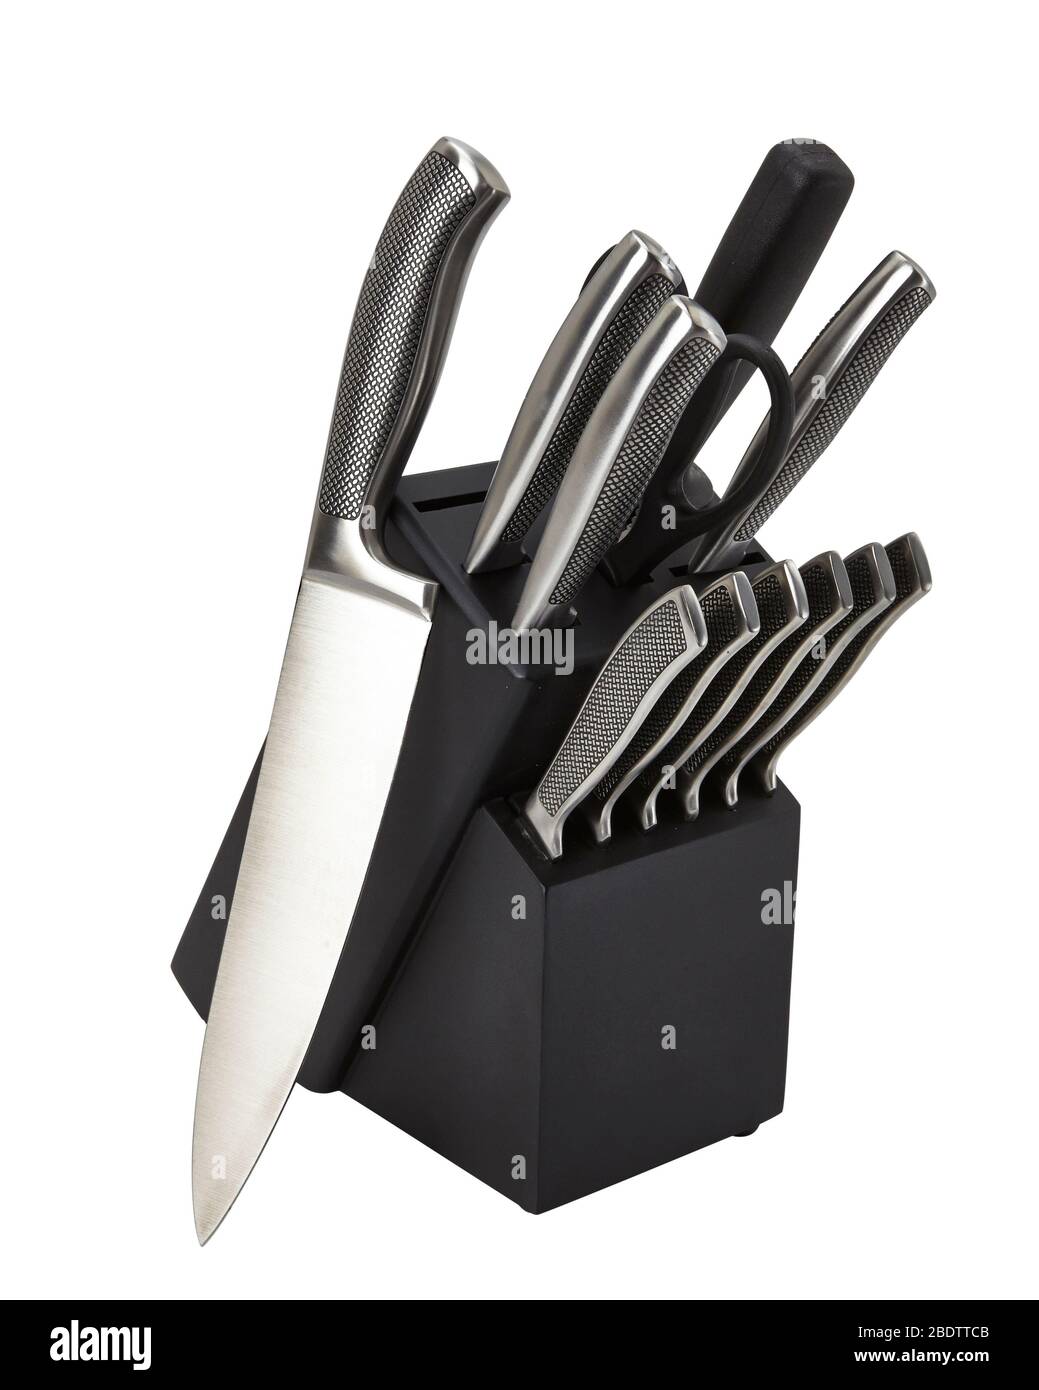 12 piece knife set with hardwood block Stock Photo